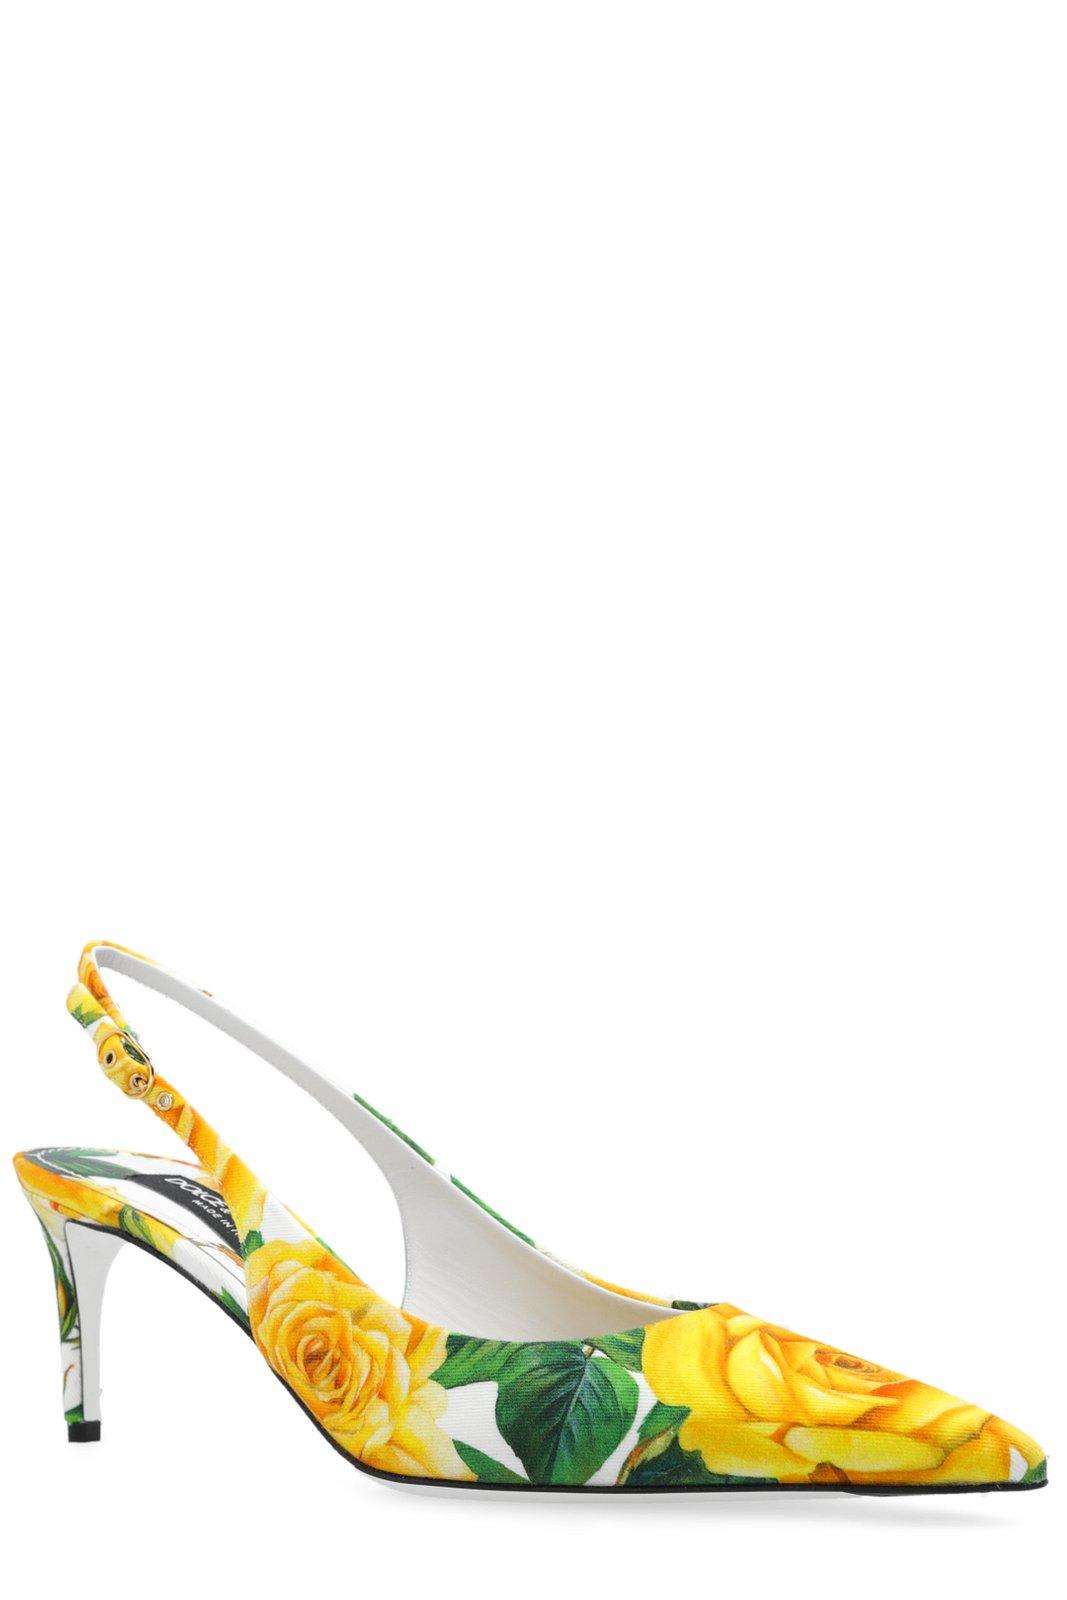 Shop Dolce & Gabbana Floral Printed Slingbacks